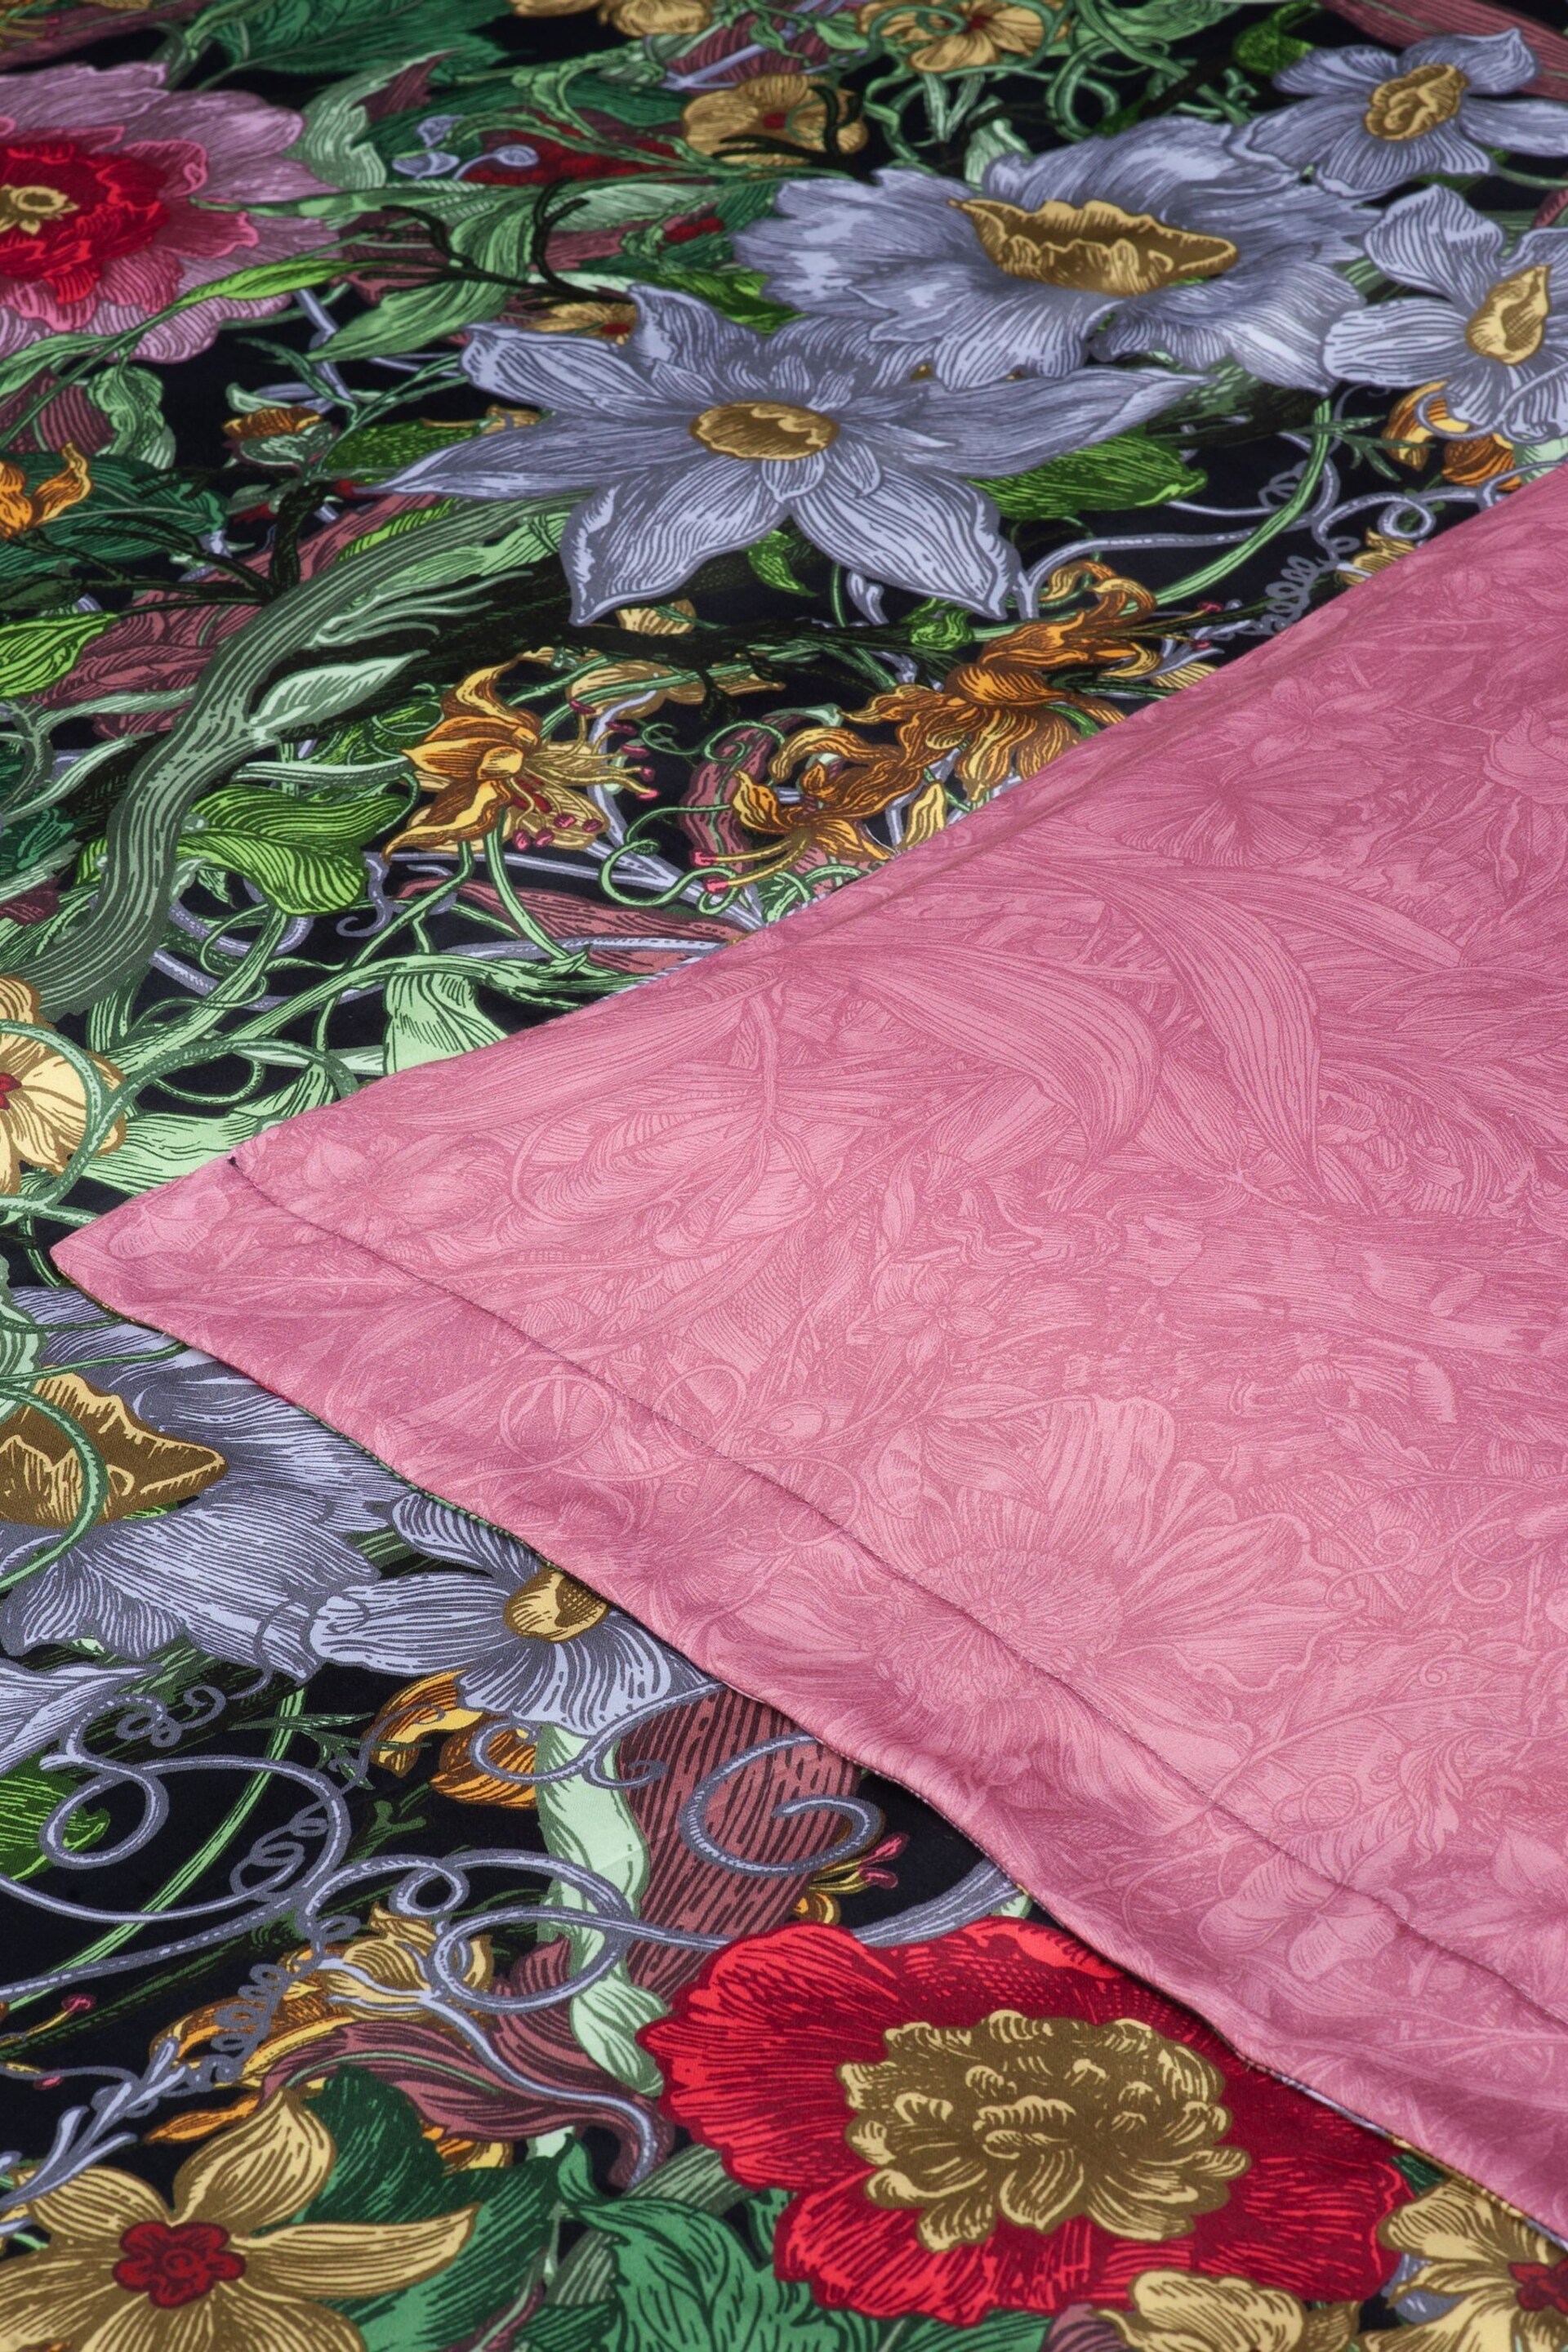 Timorous Beasties Midnight Berkeley Blooms Duvet Cover and Pillowcase Set - Image 3 of 8